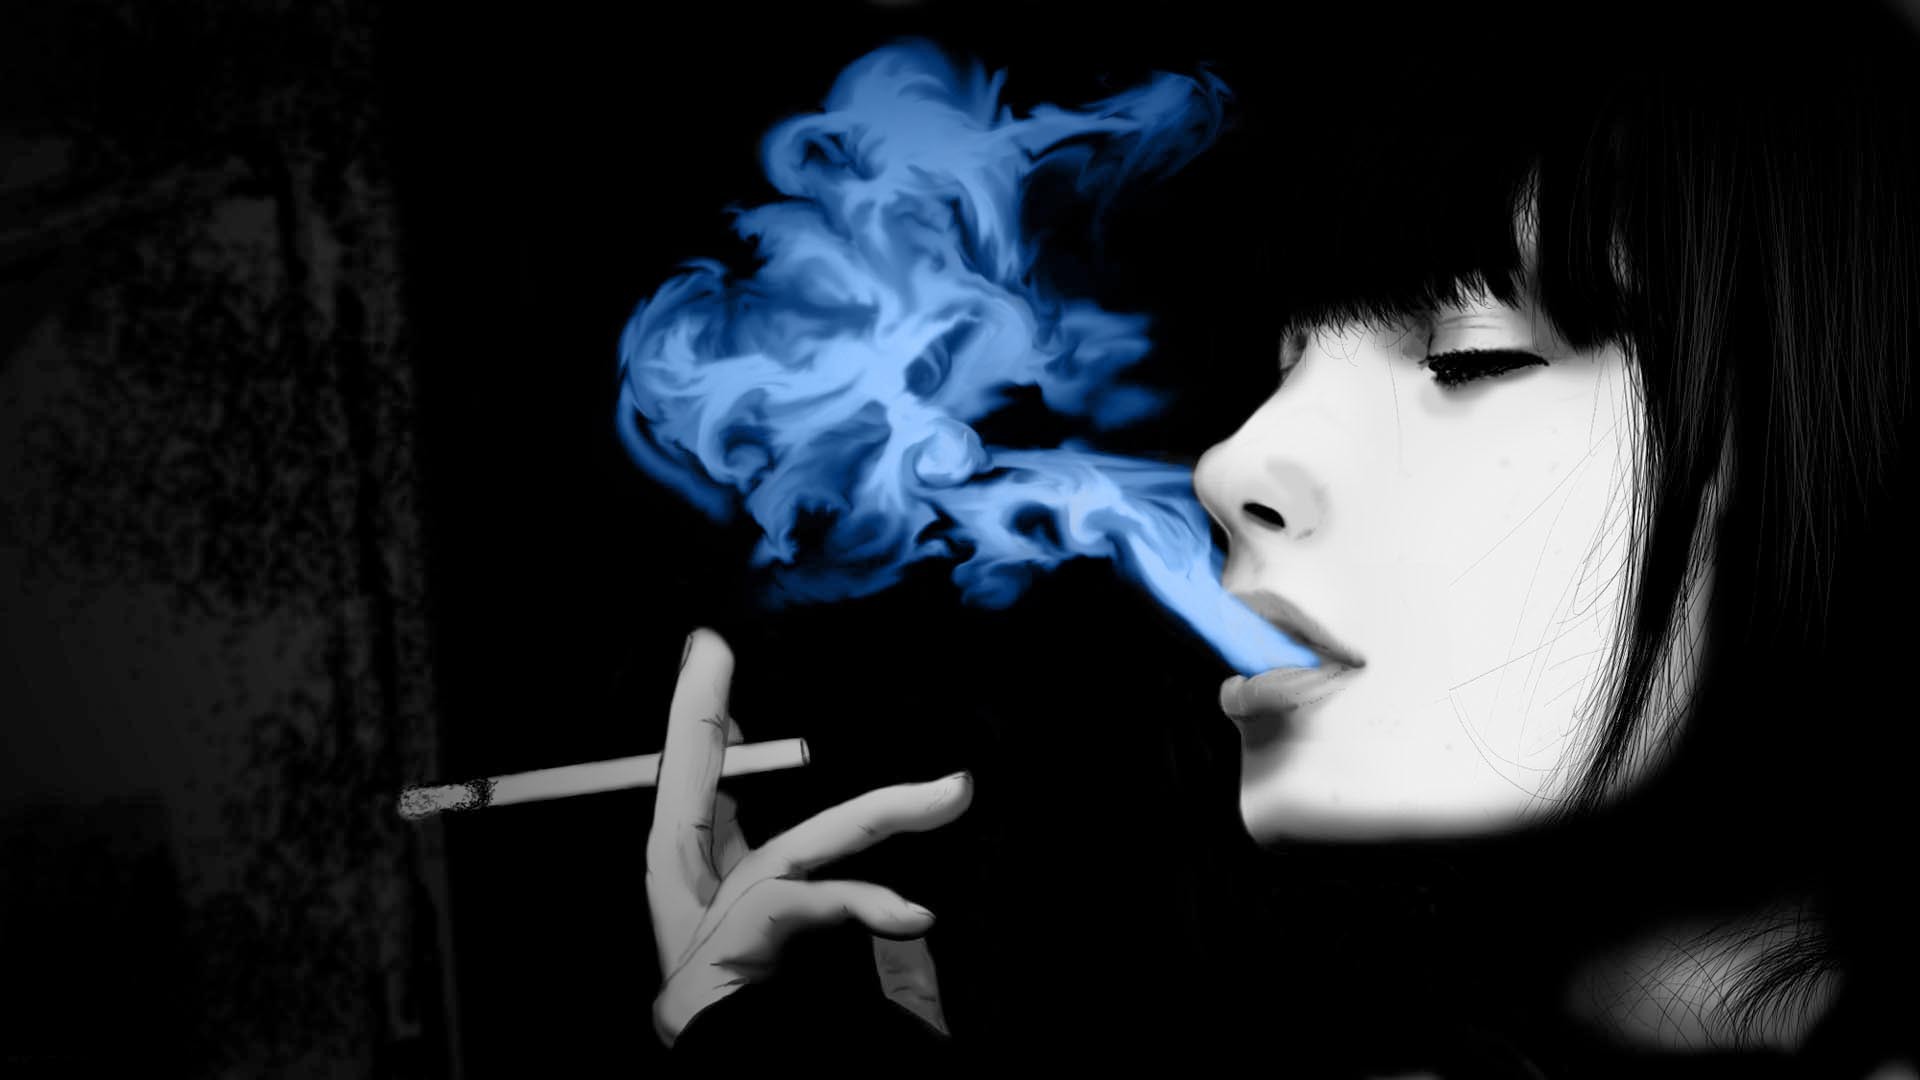 smoking wallpaper download,smoking,smoke,cigarette,tobacco products,darkness